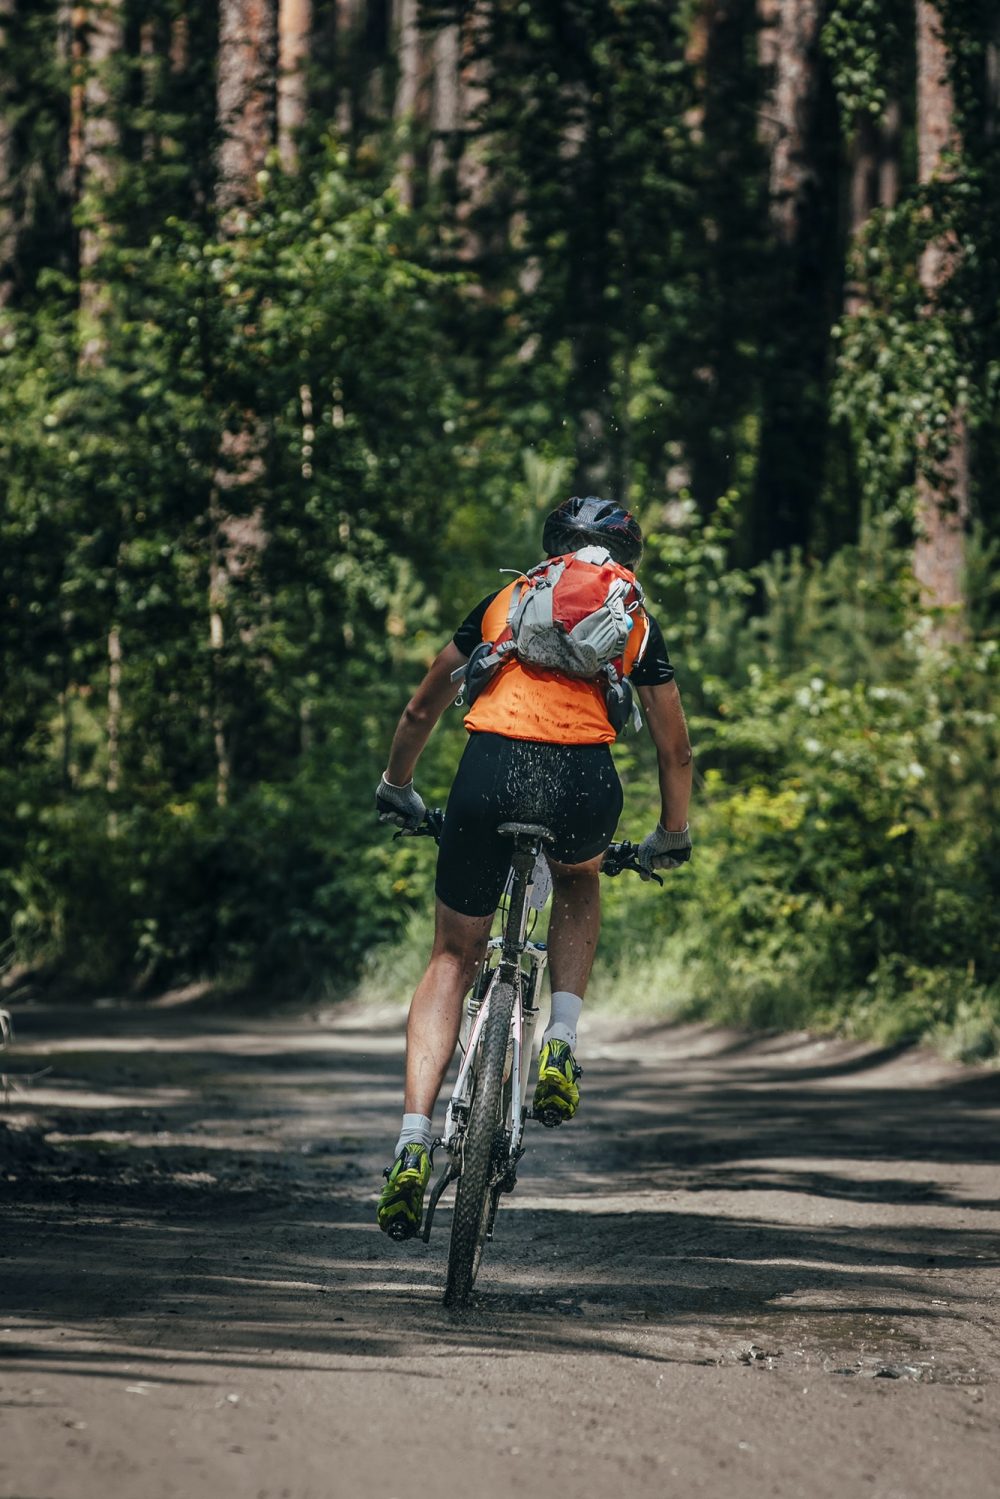 Mountainbiker rides in forest